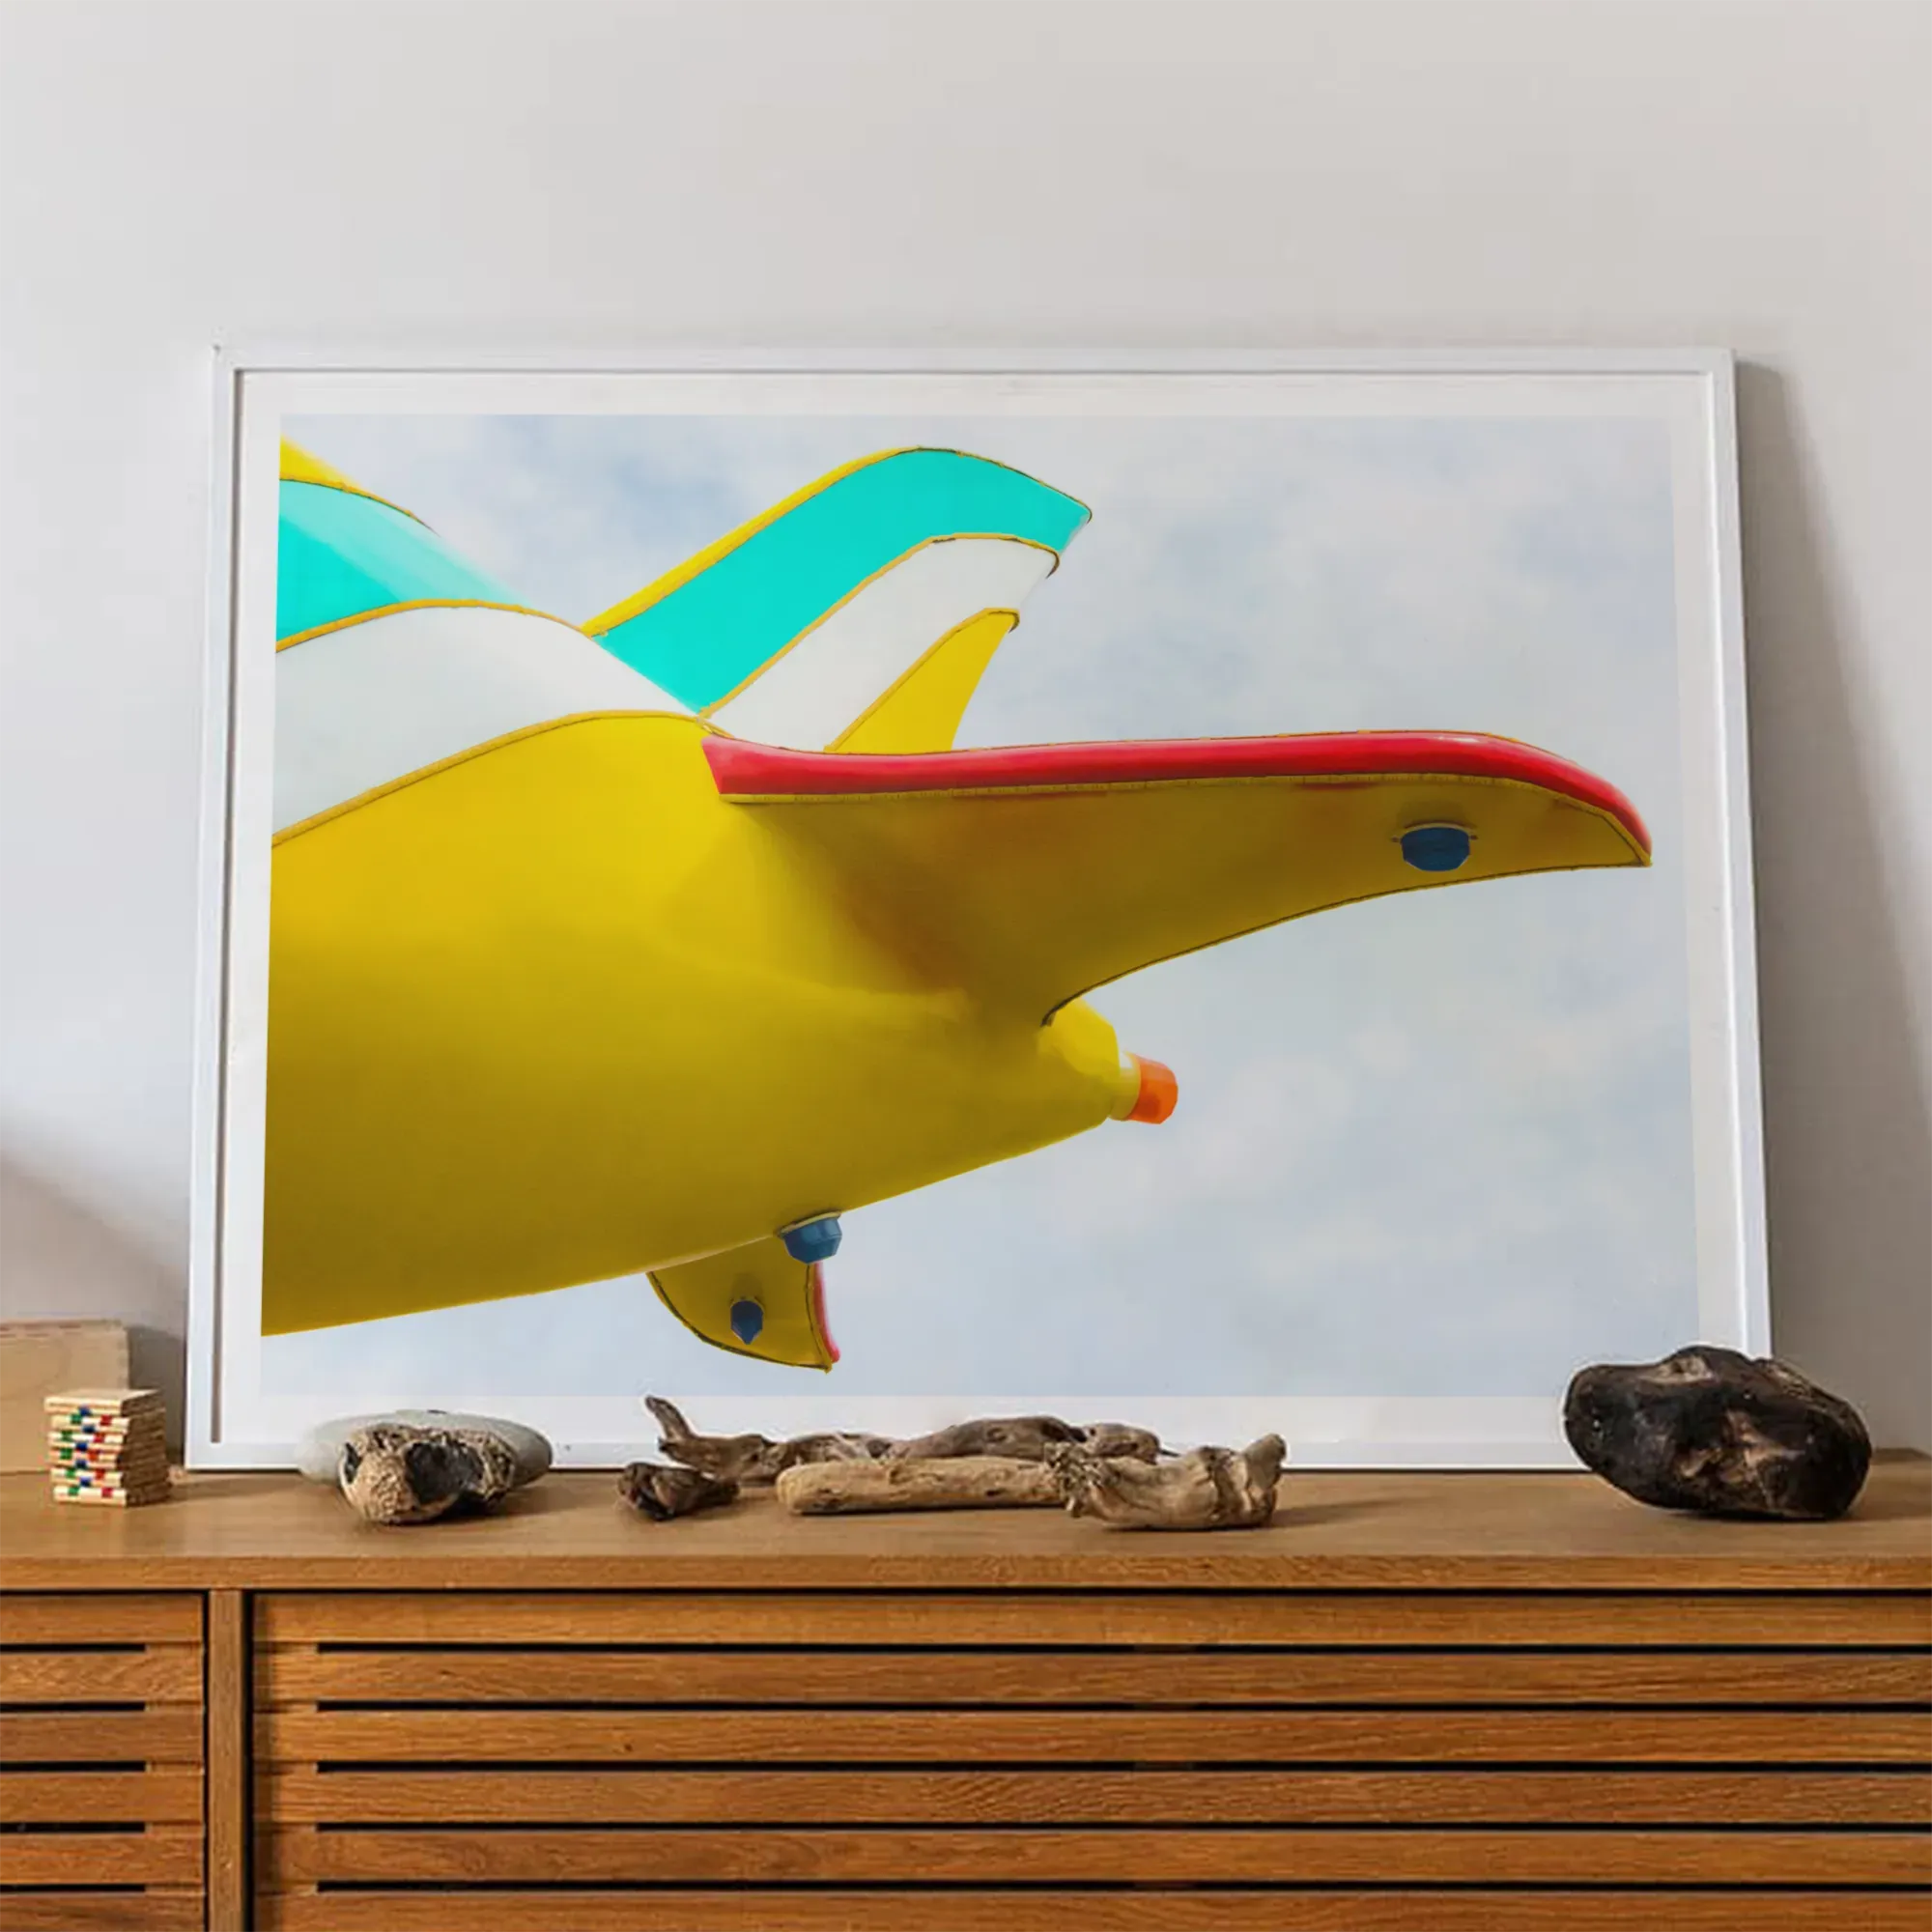 Flying High 2 Art Print - Amusement Park Airplane - Posters Prints & Visual Artwork - Aesthetic Art